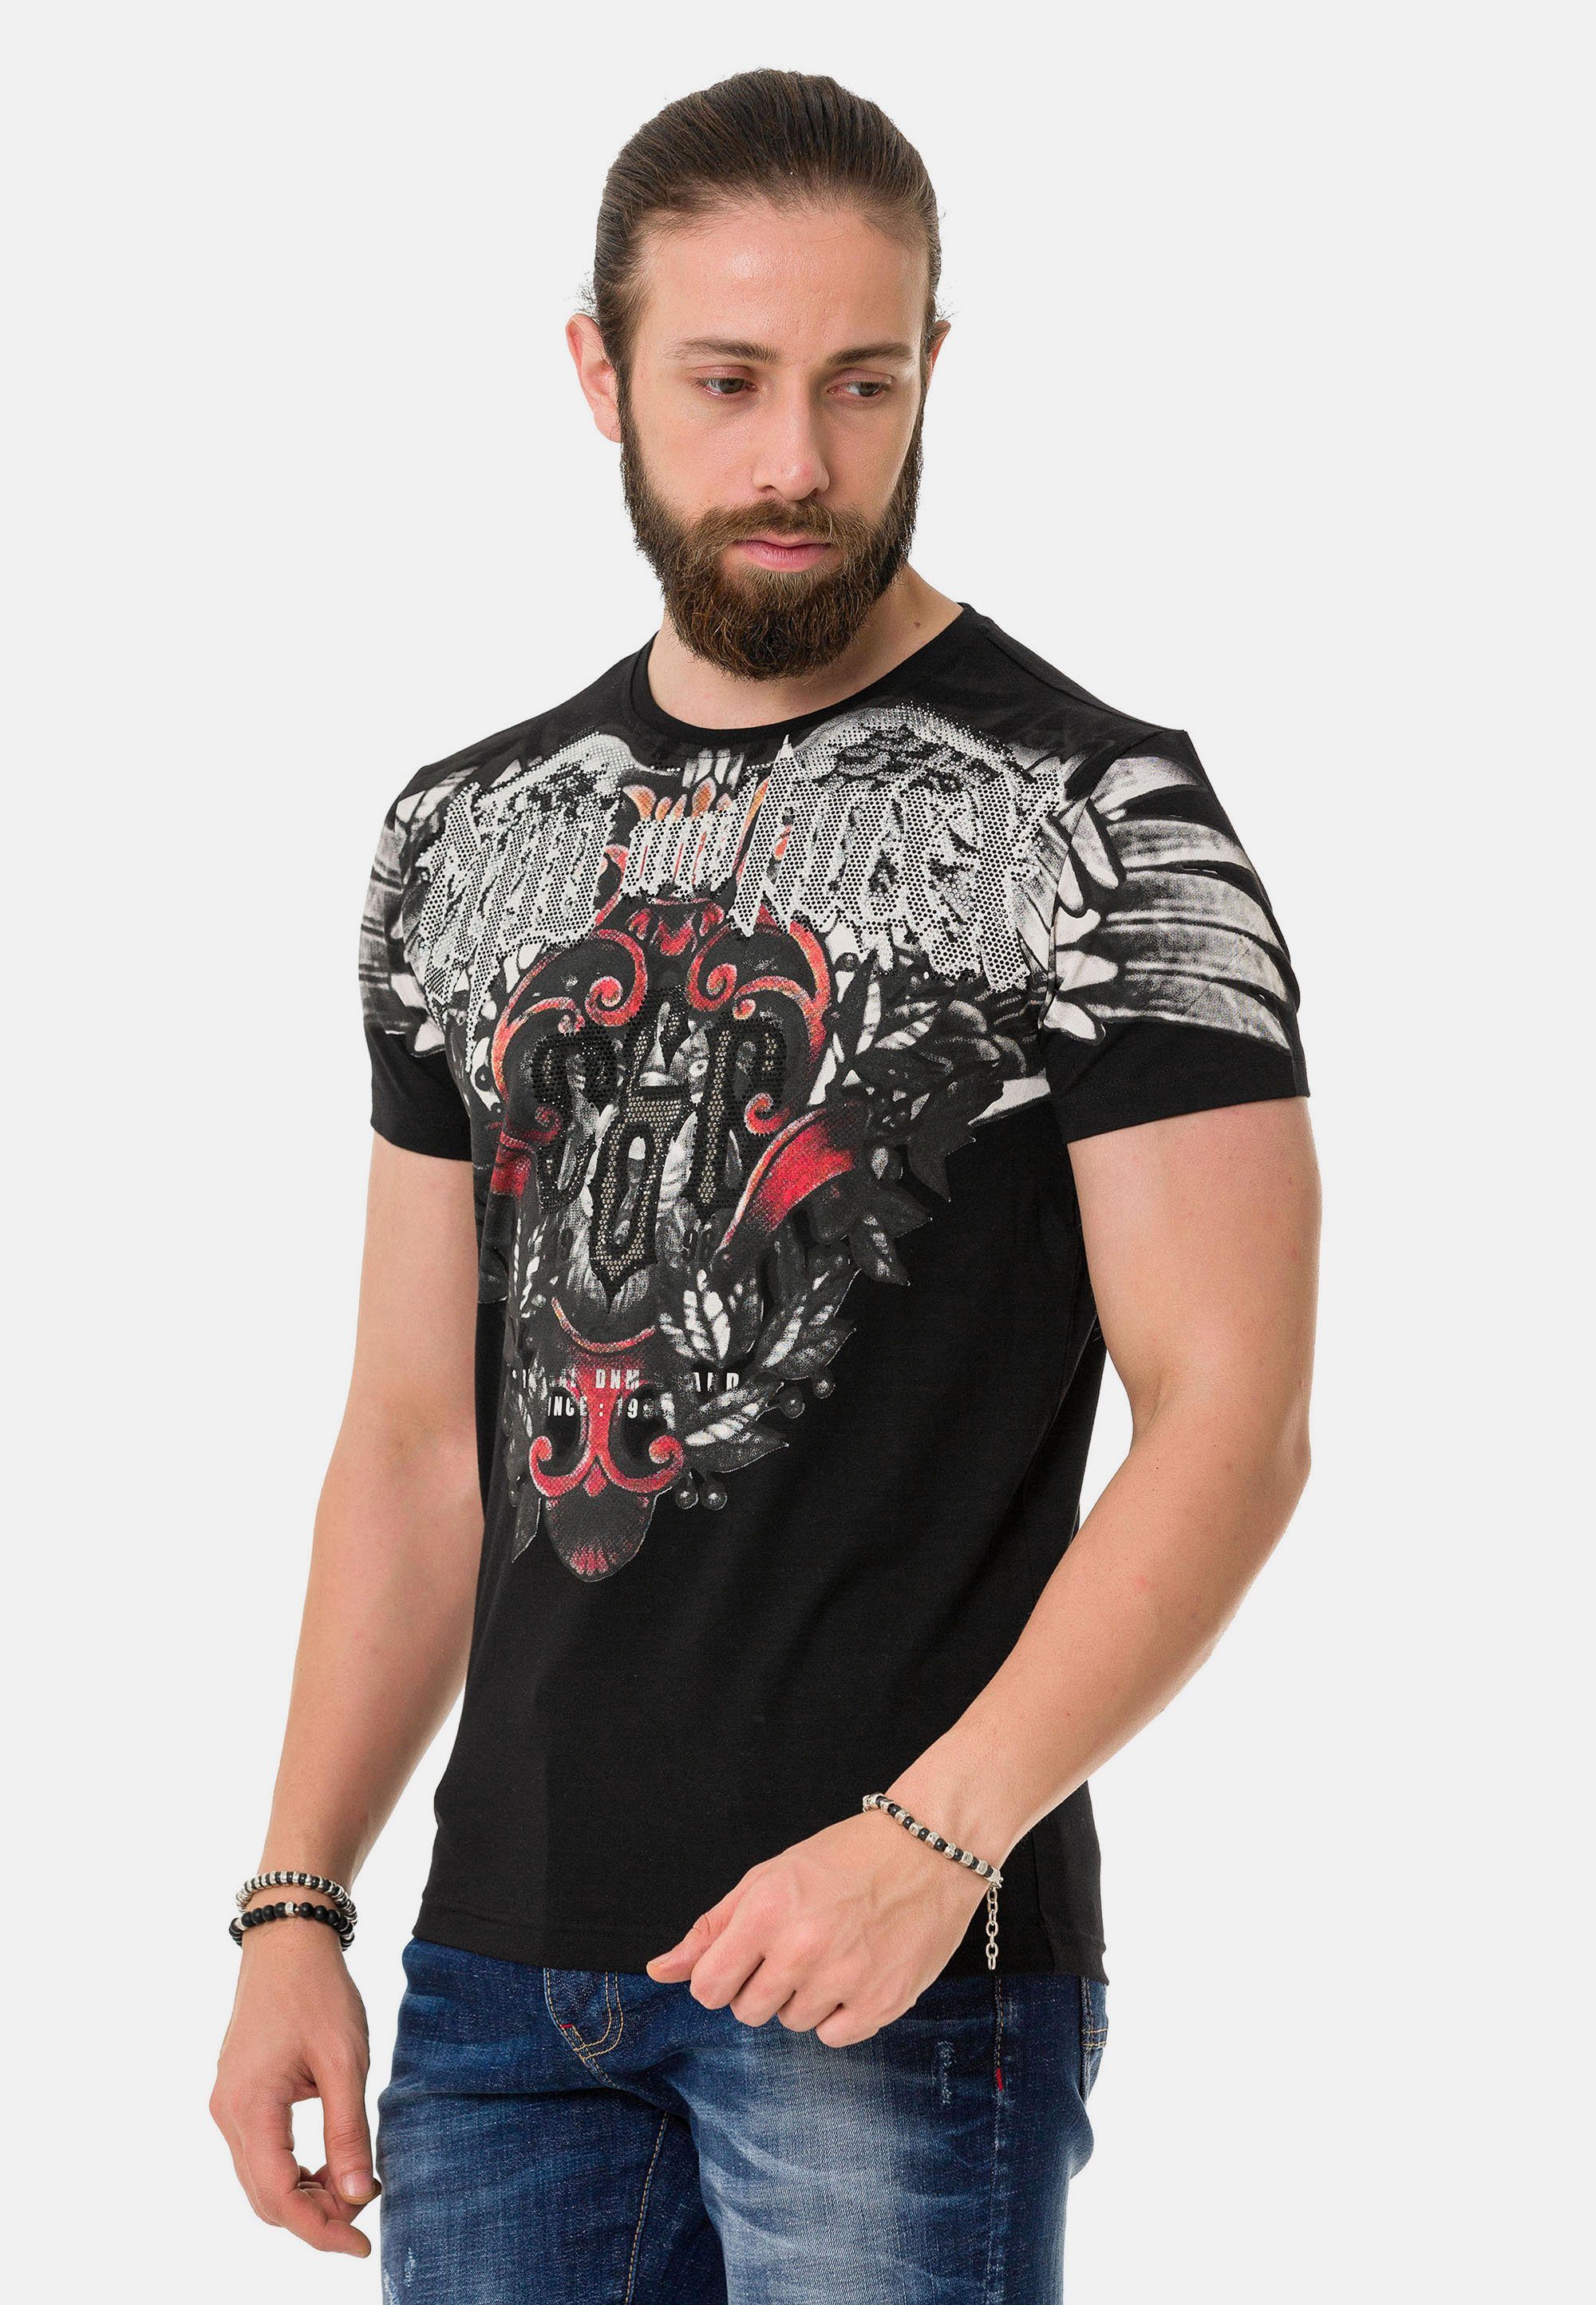 rockigem T-Shirt in schwarz & Baxx Cipo Look